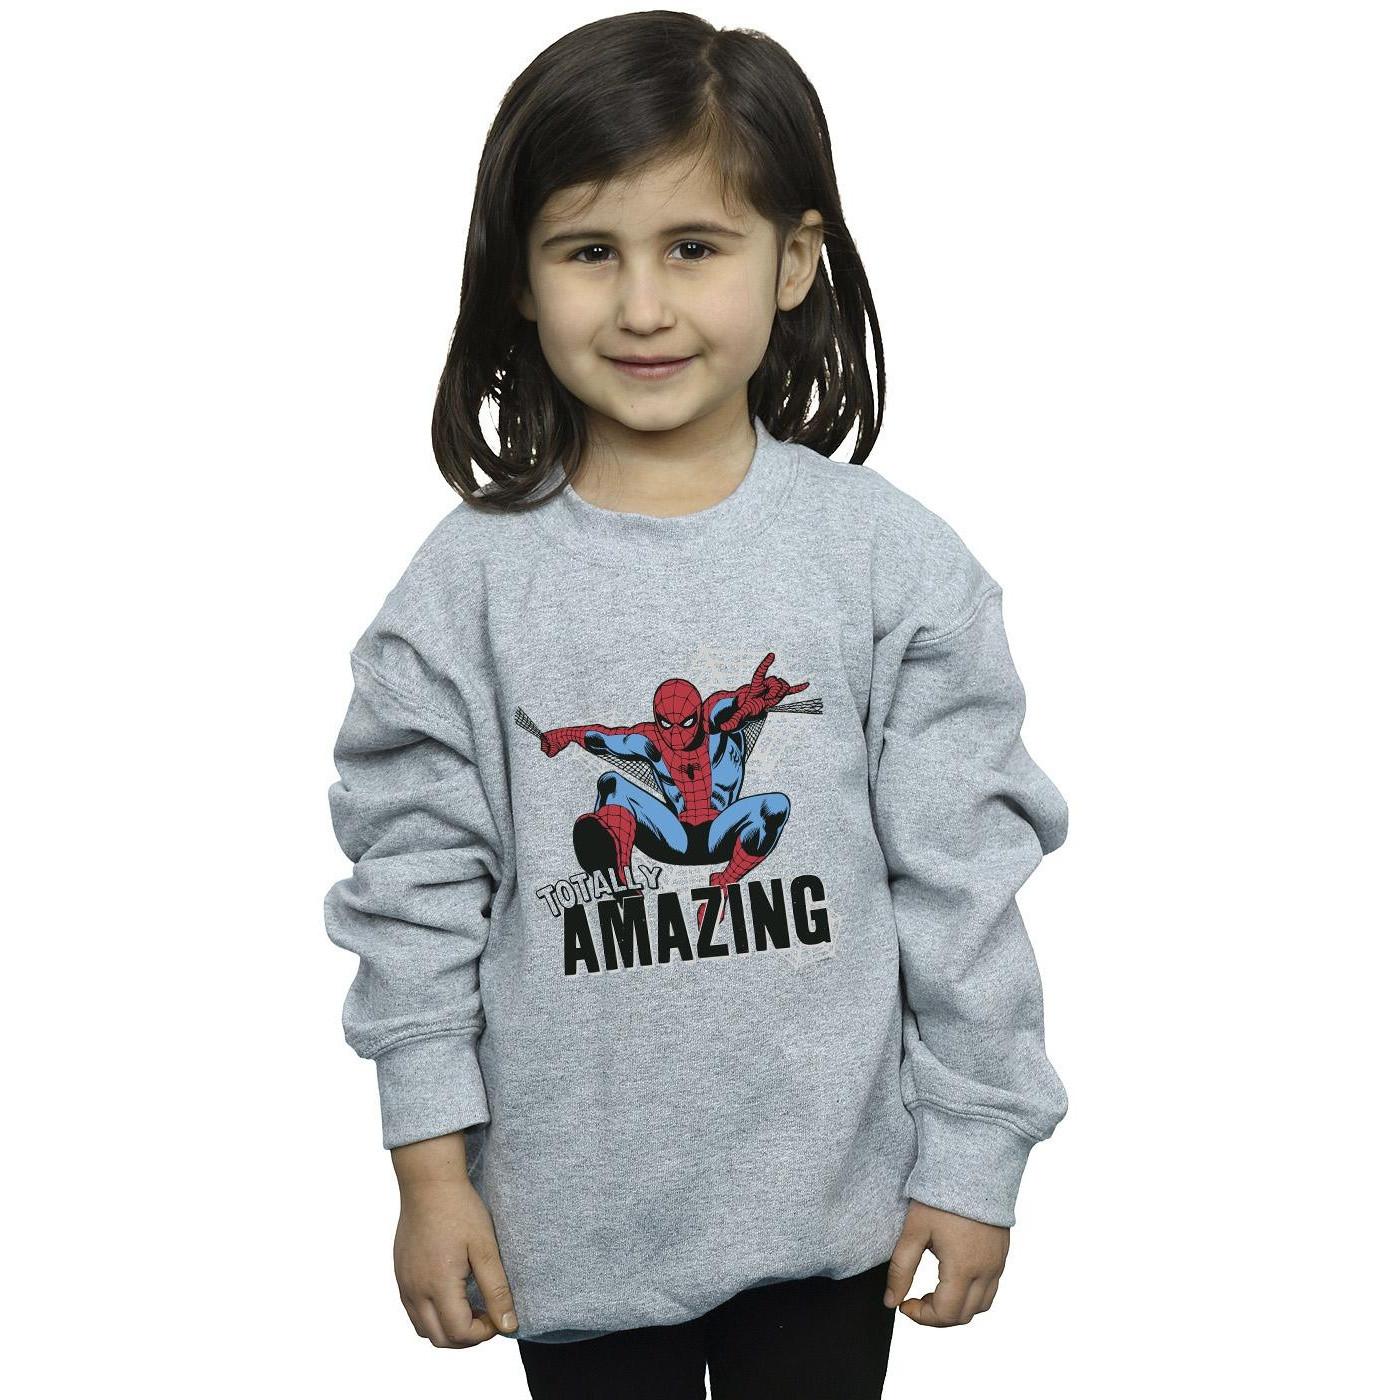 MARVEL  SpiderMan Amazing Sweatshirt 